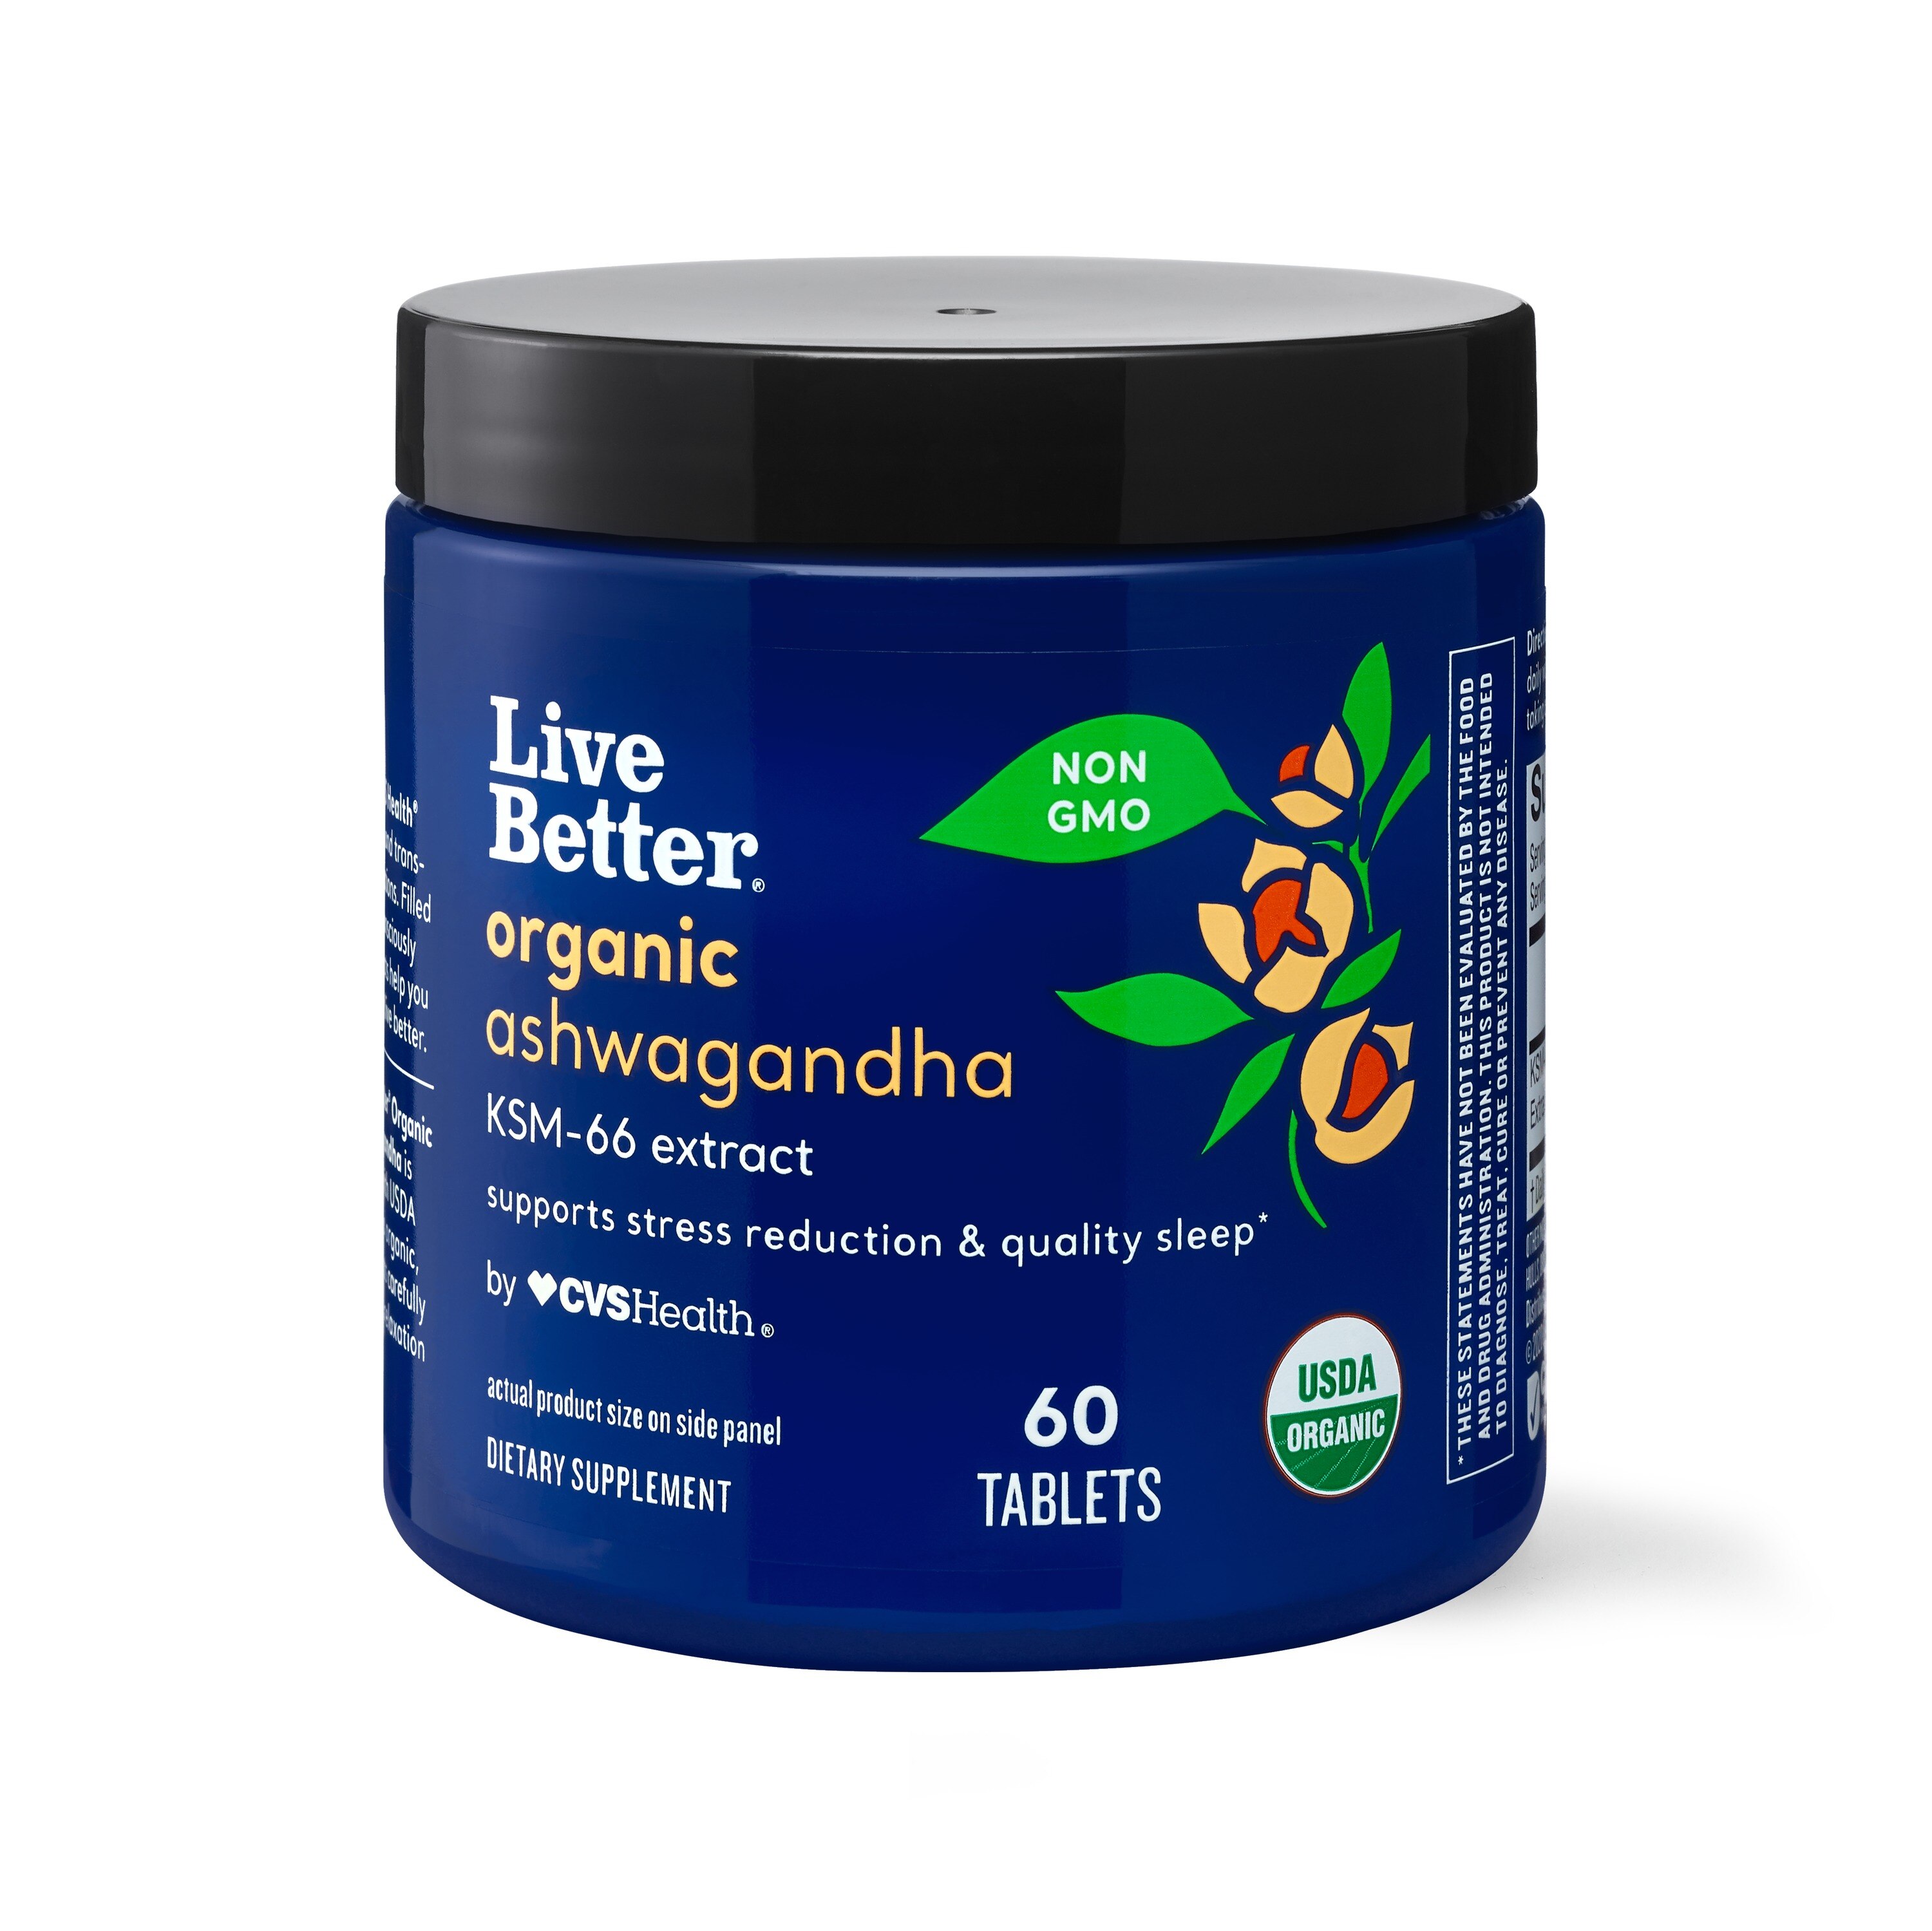 Live Better - Suplemento dietario, extracto de ashwagandha orgánica con KSM-66, 60 u.